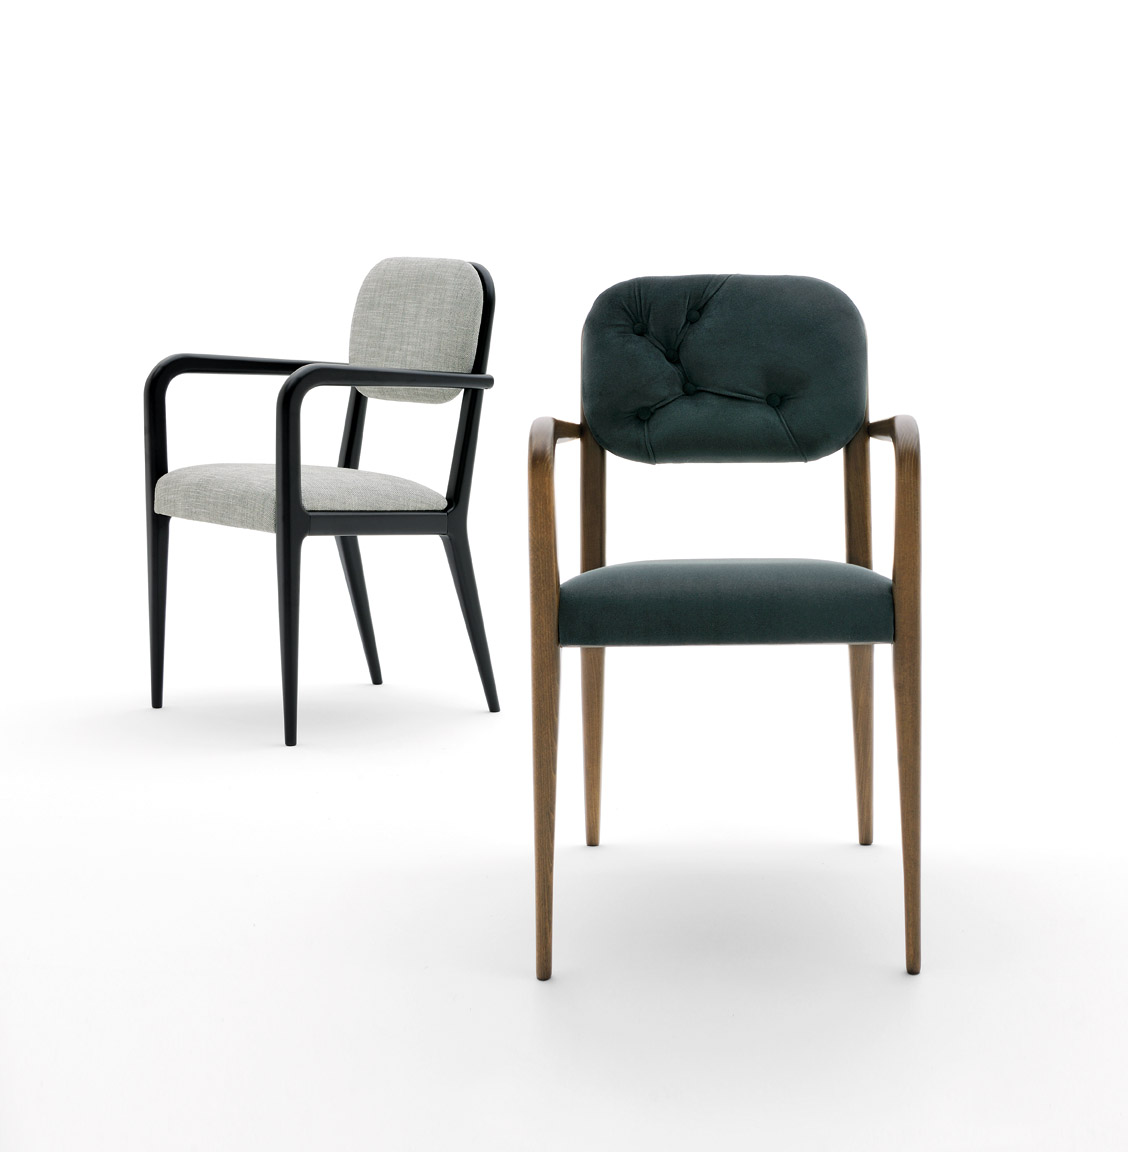 Montbel presenta la nuova sedia Garbo disegnata da Antonio Minervini